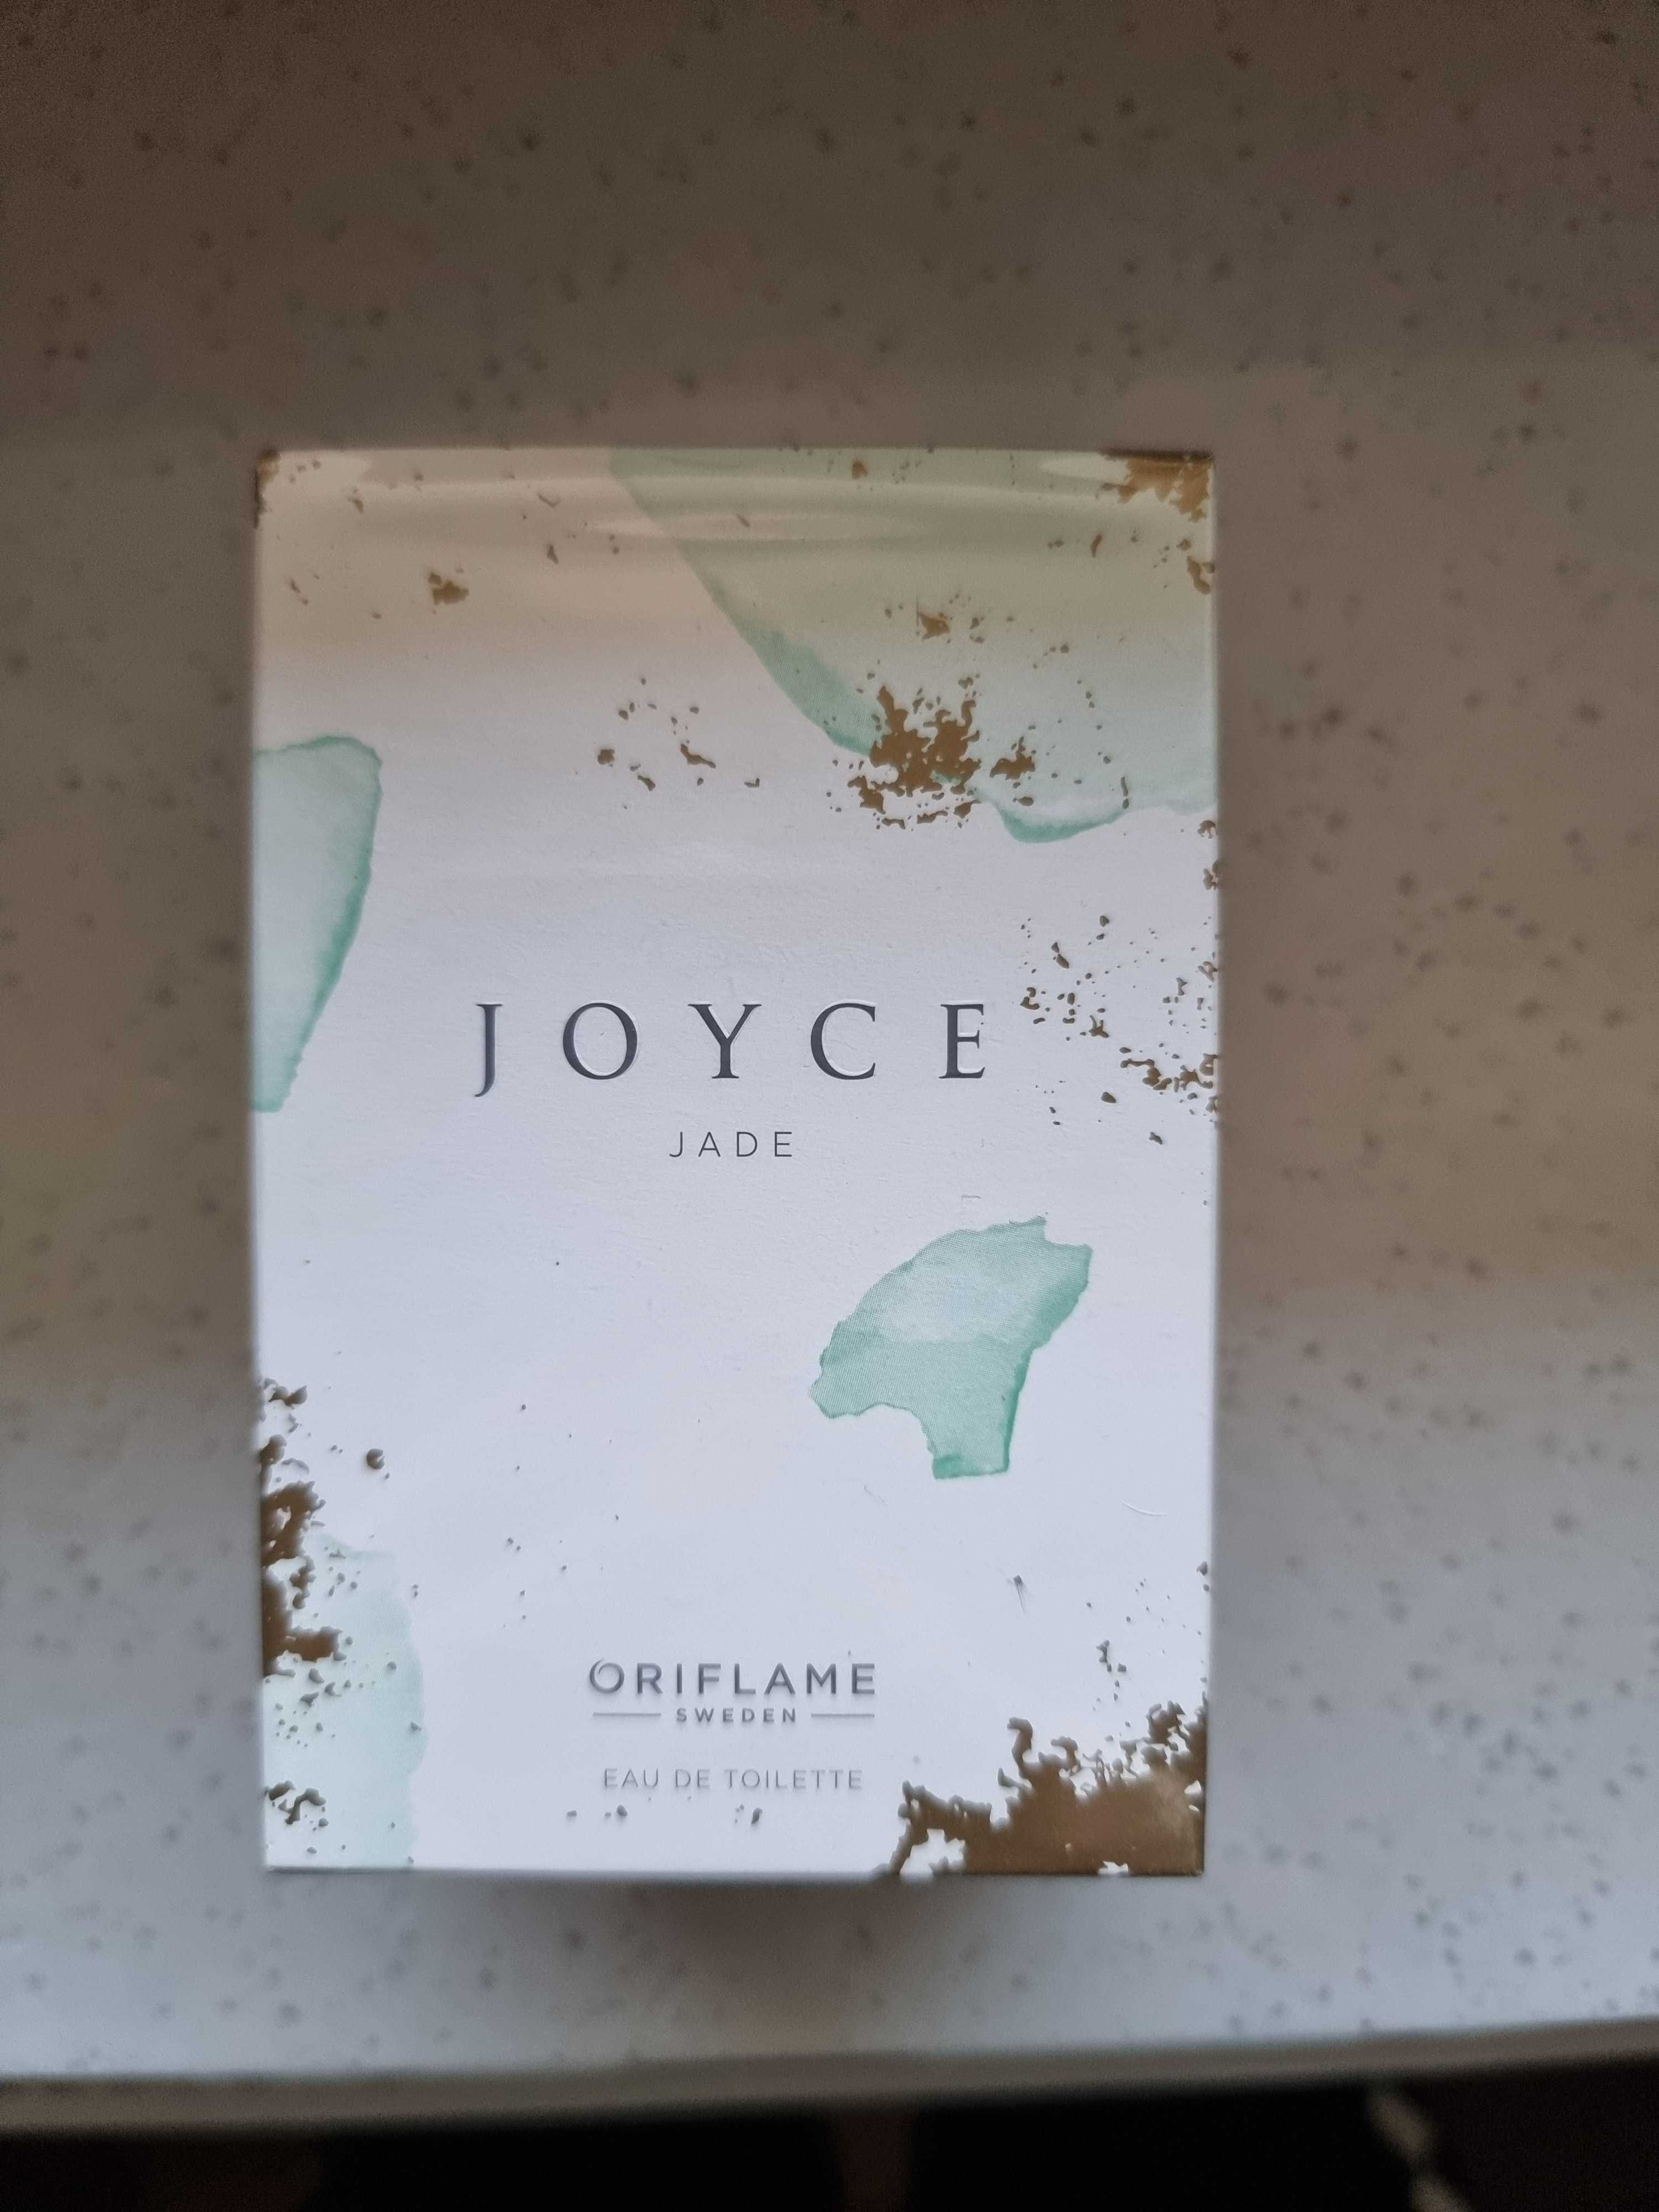 Joyce Jade Oriflame